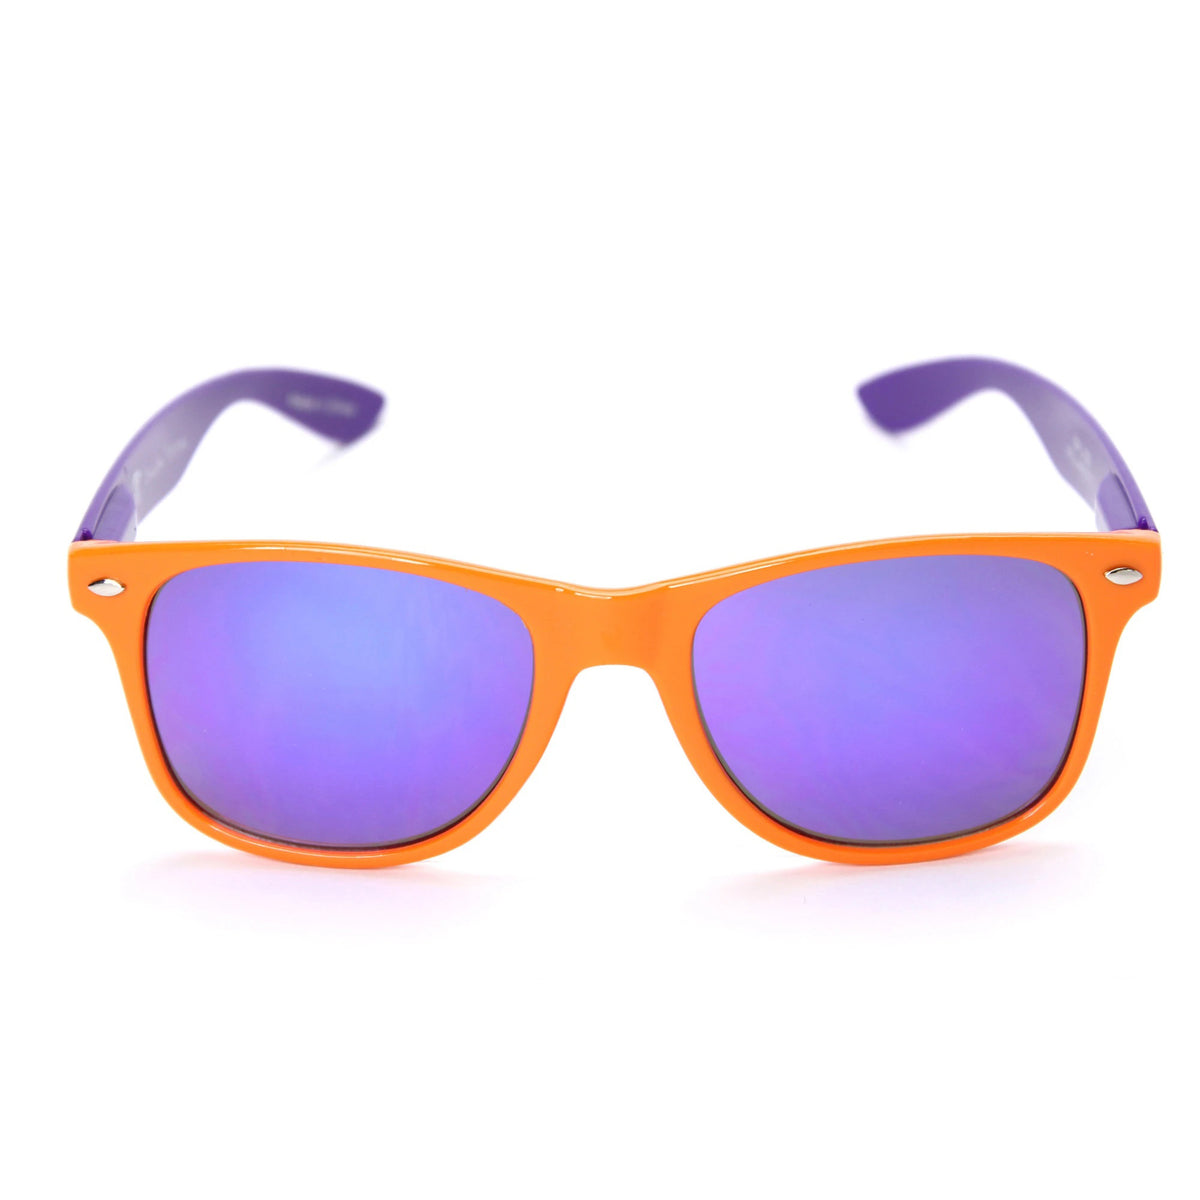 Society43 Clemson Tigers Sunglasses